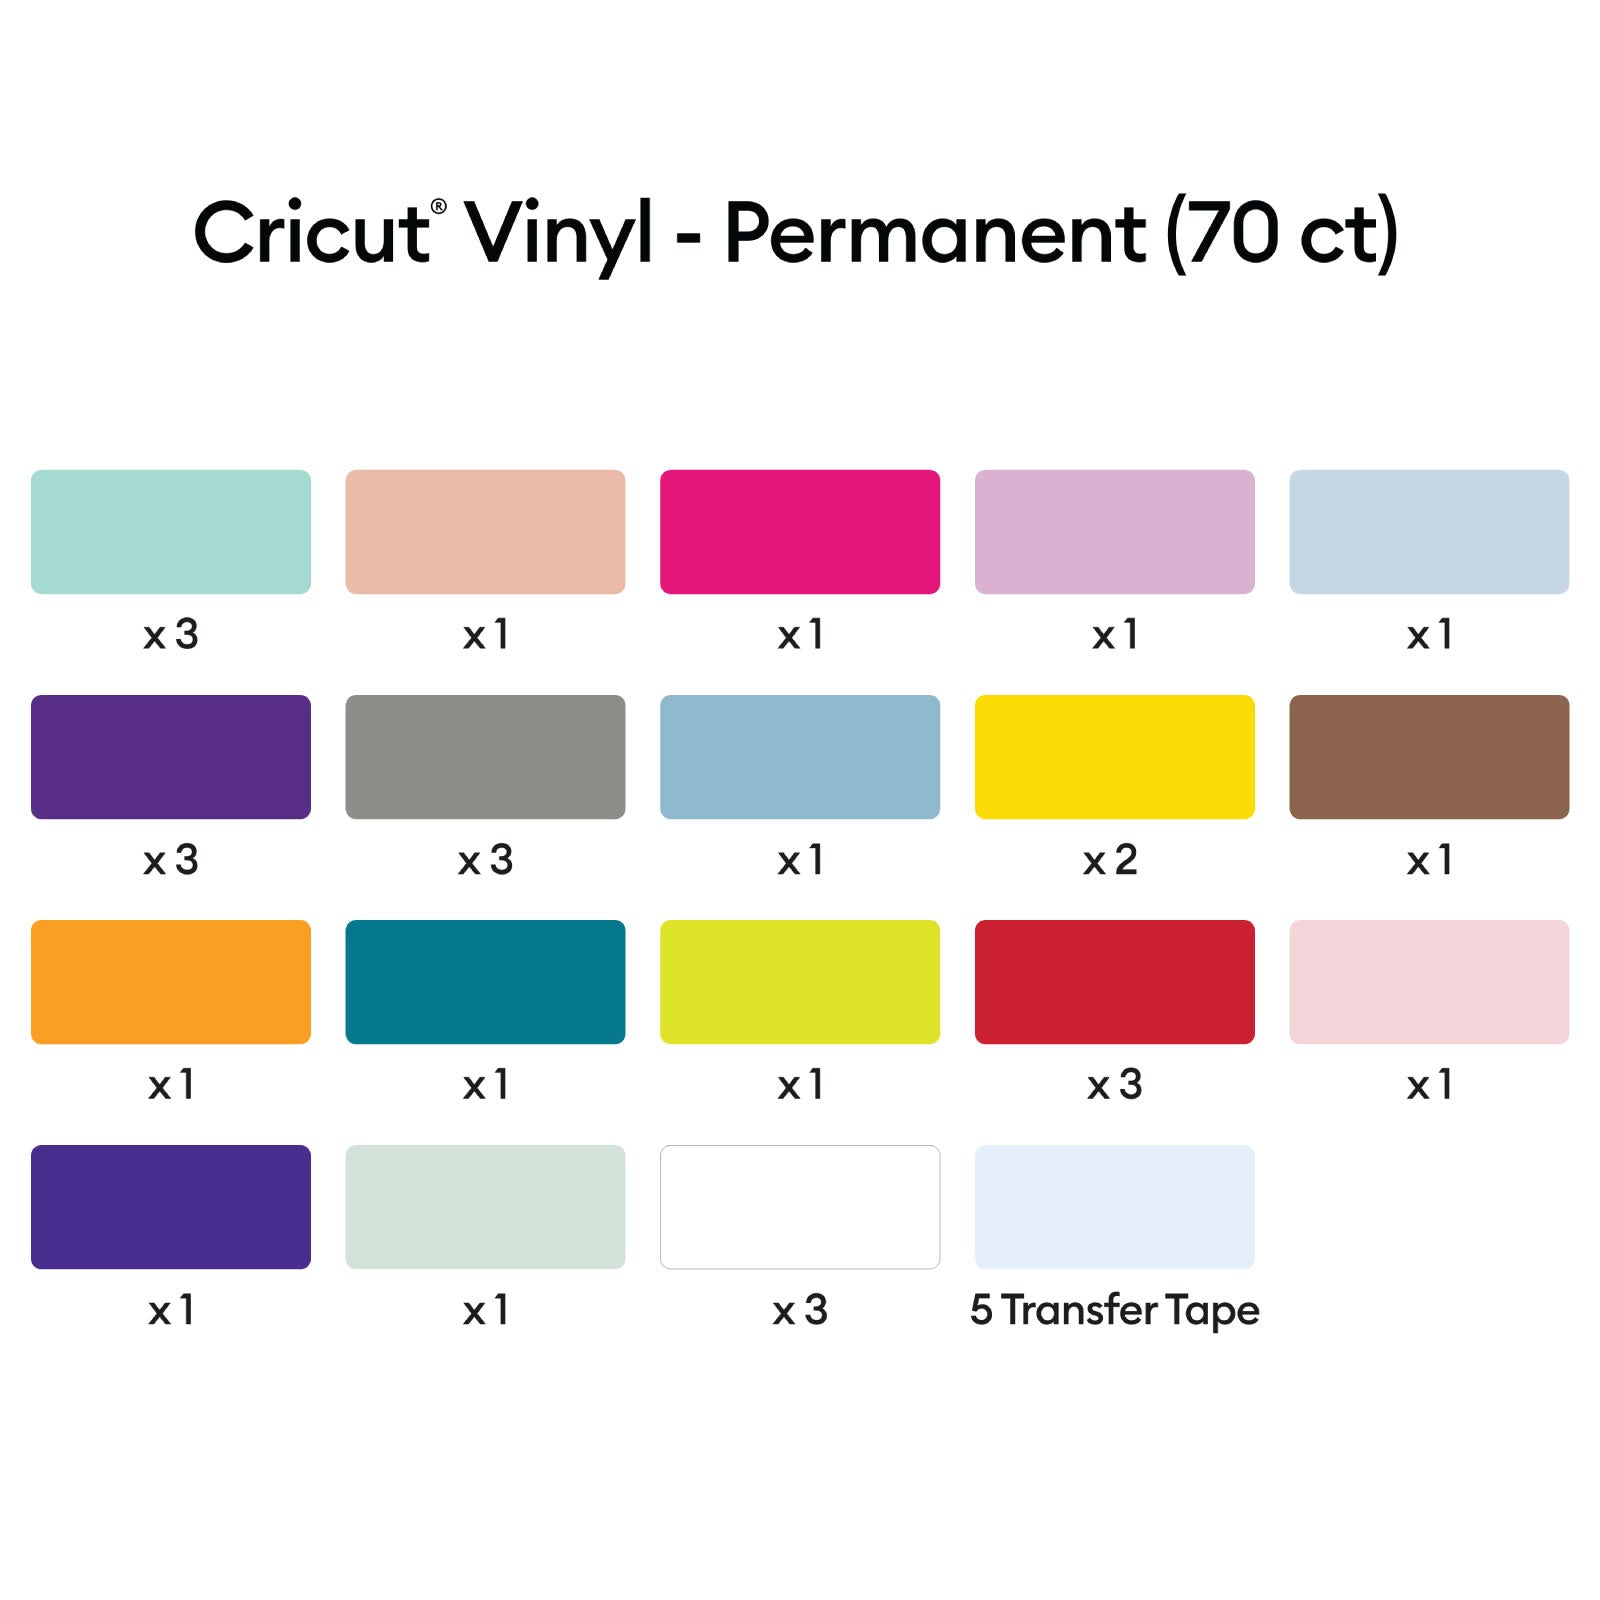 Cricut Vinyl, Ultimate Sampler - Permanent 70 ct